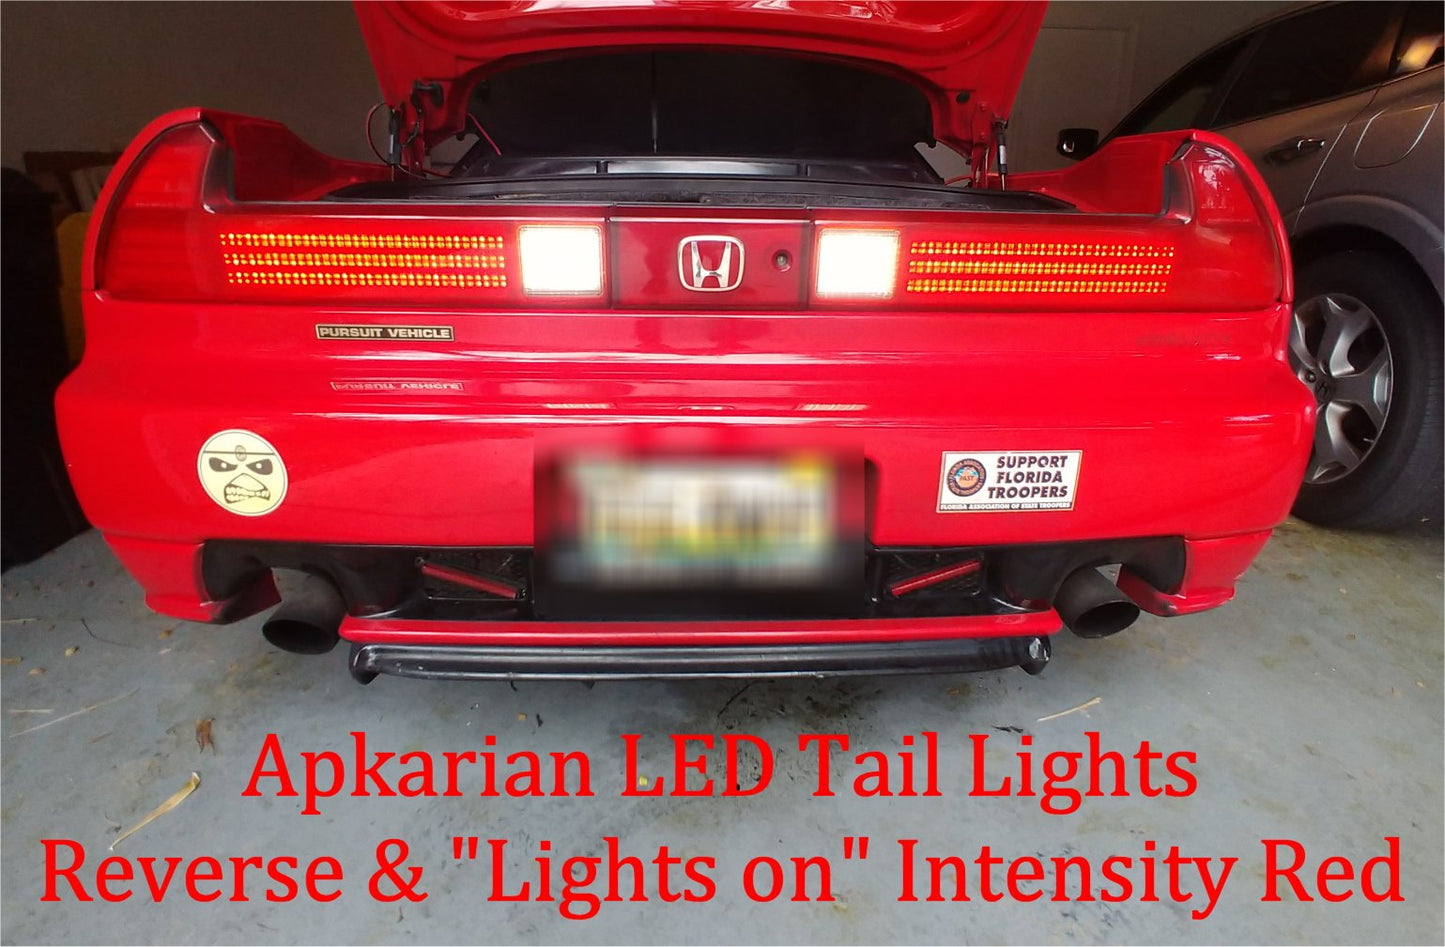 Apkarian 3 Bar LED Taillights - NOS NEVER INSTALLED